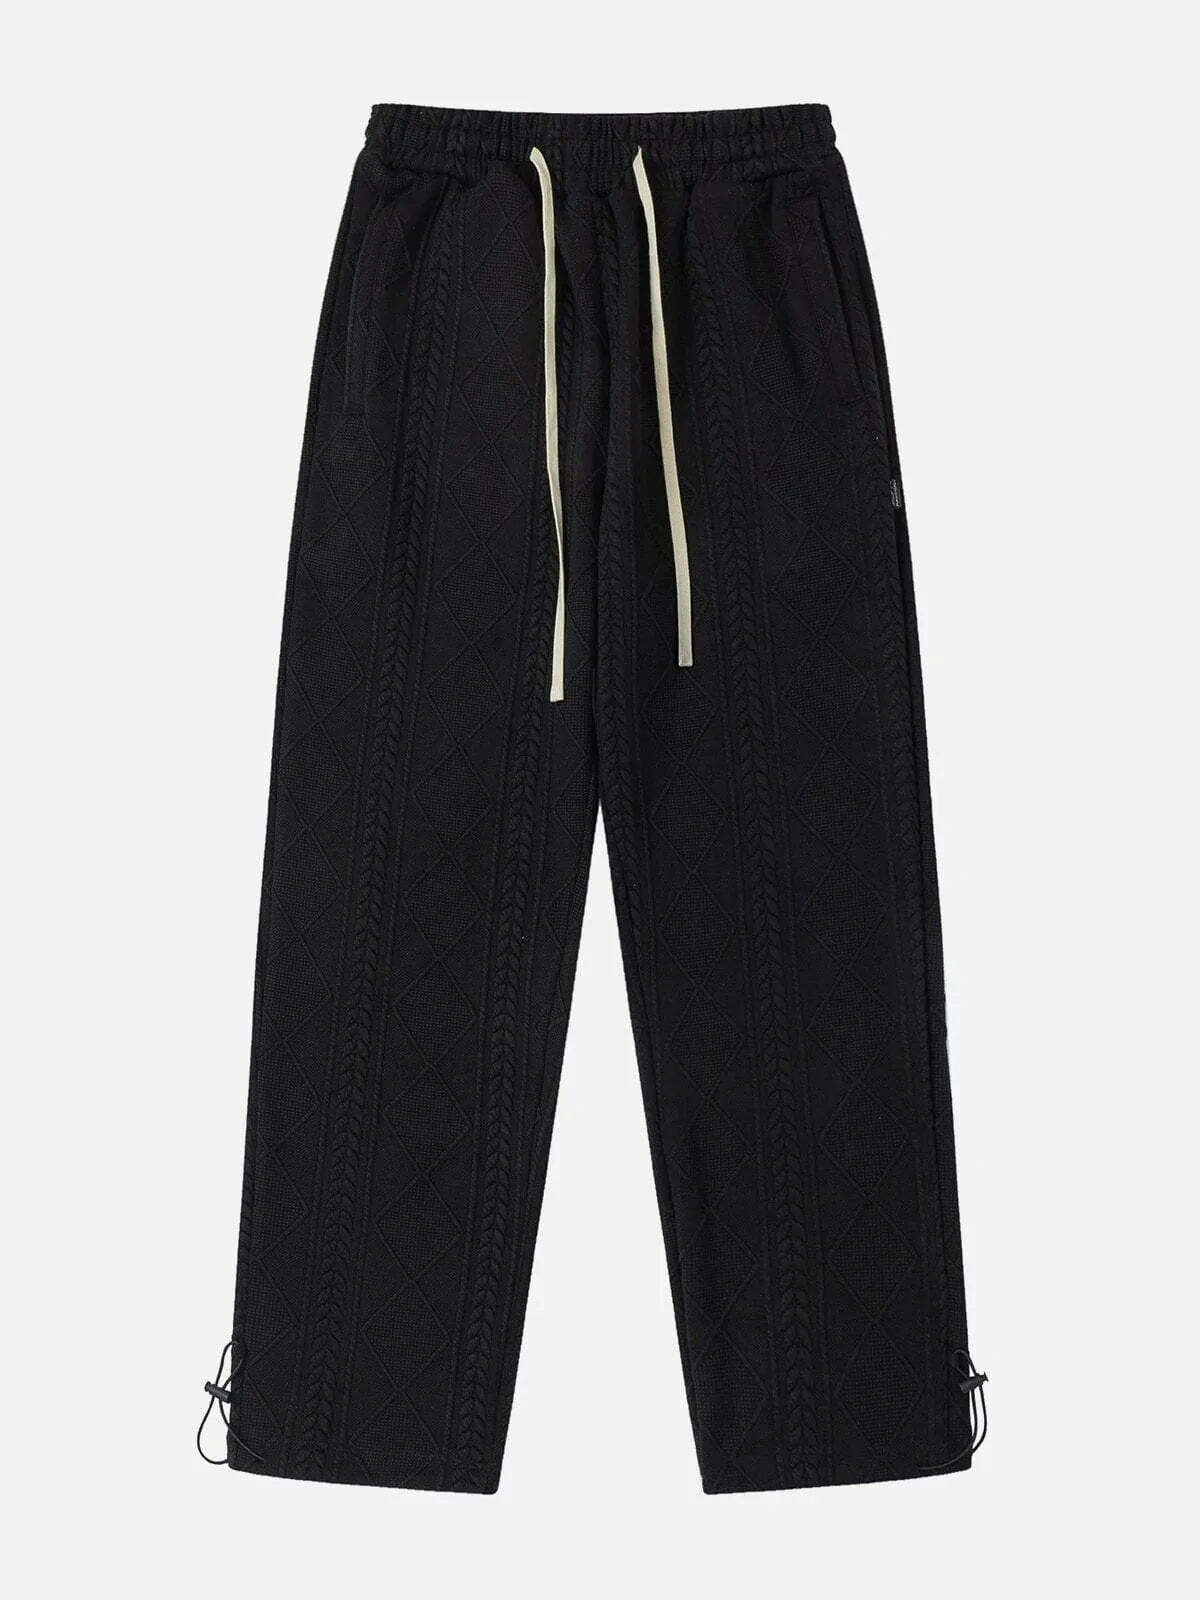 minimalist drawstring pants sleek & versatile streetwear 3402